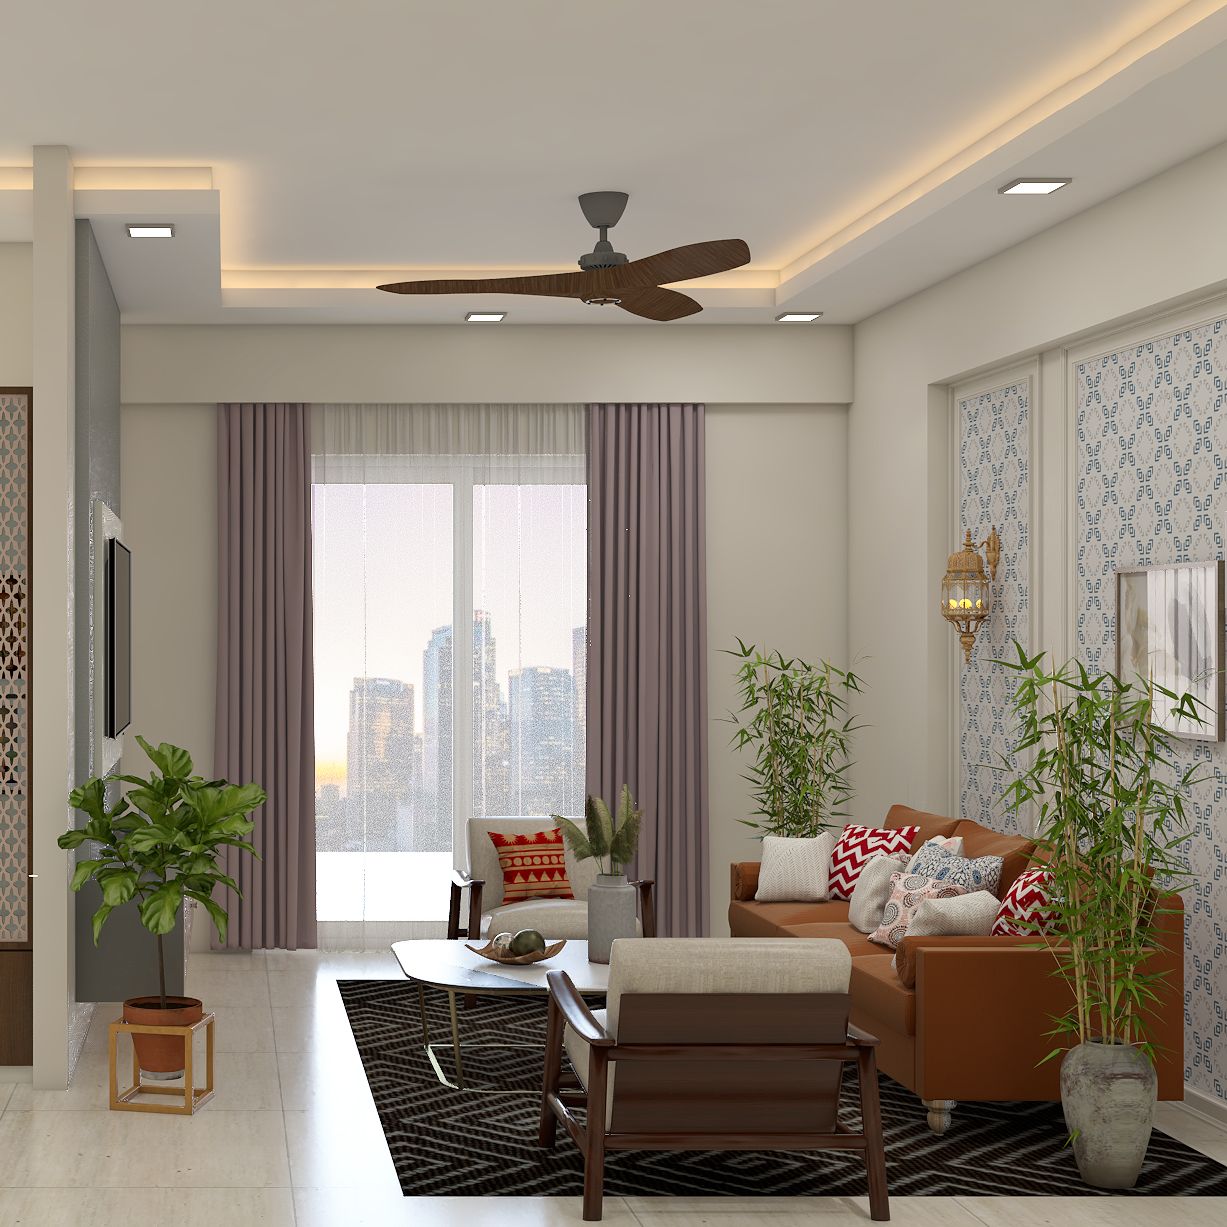 Modern Living Room Design With An Orange Upholstered 3-Seater Sofa